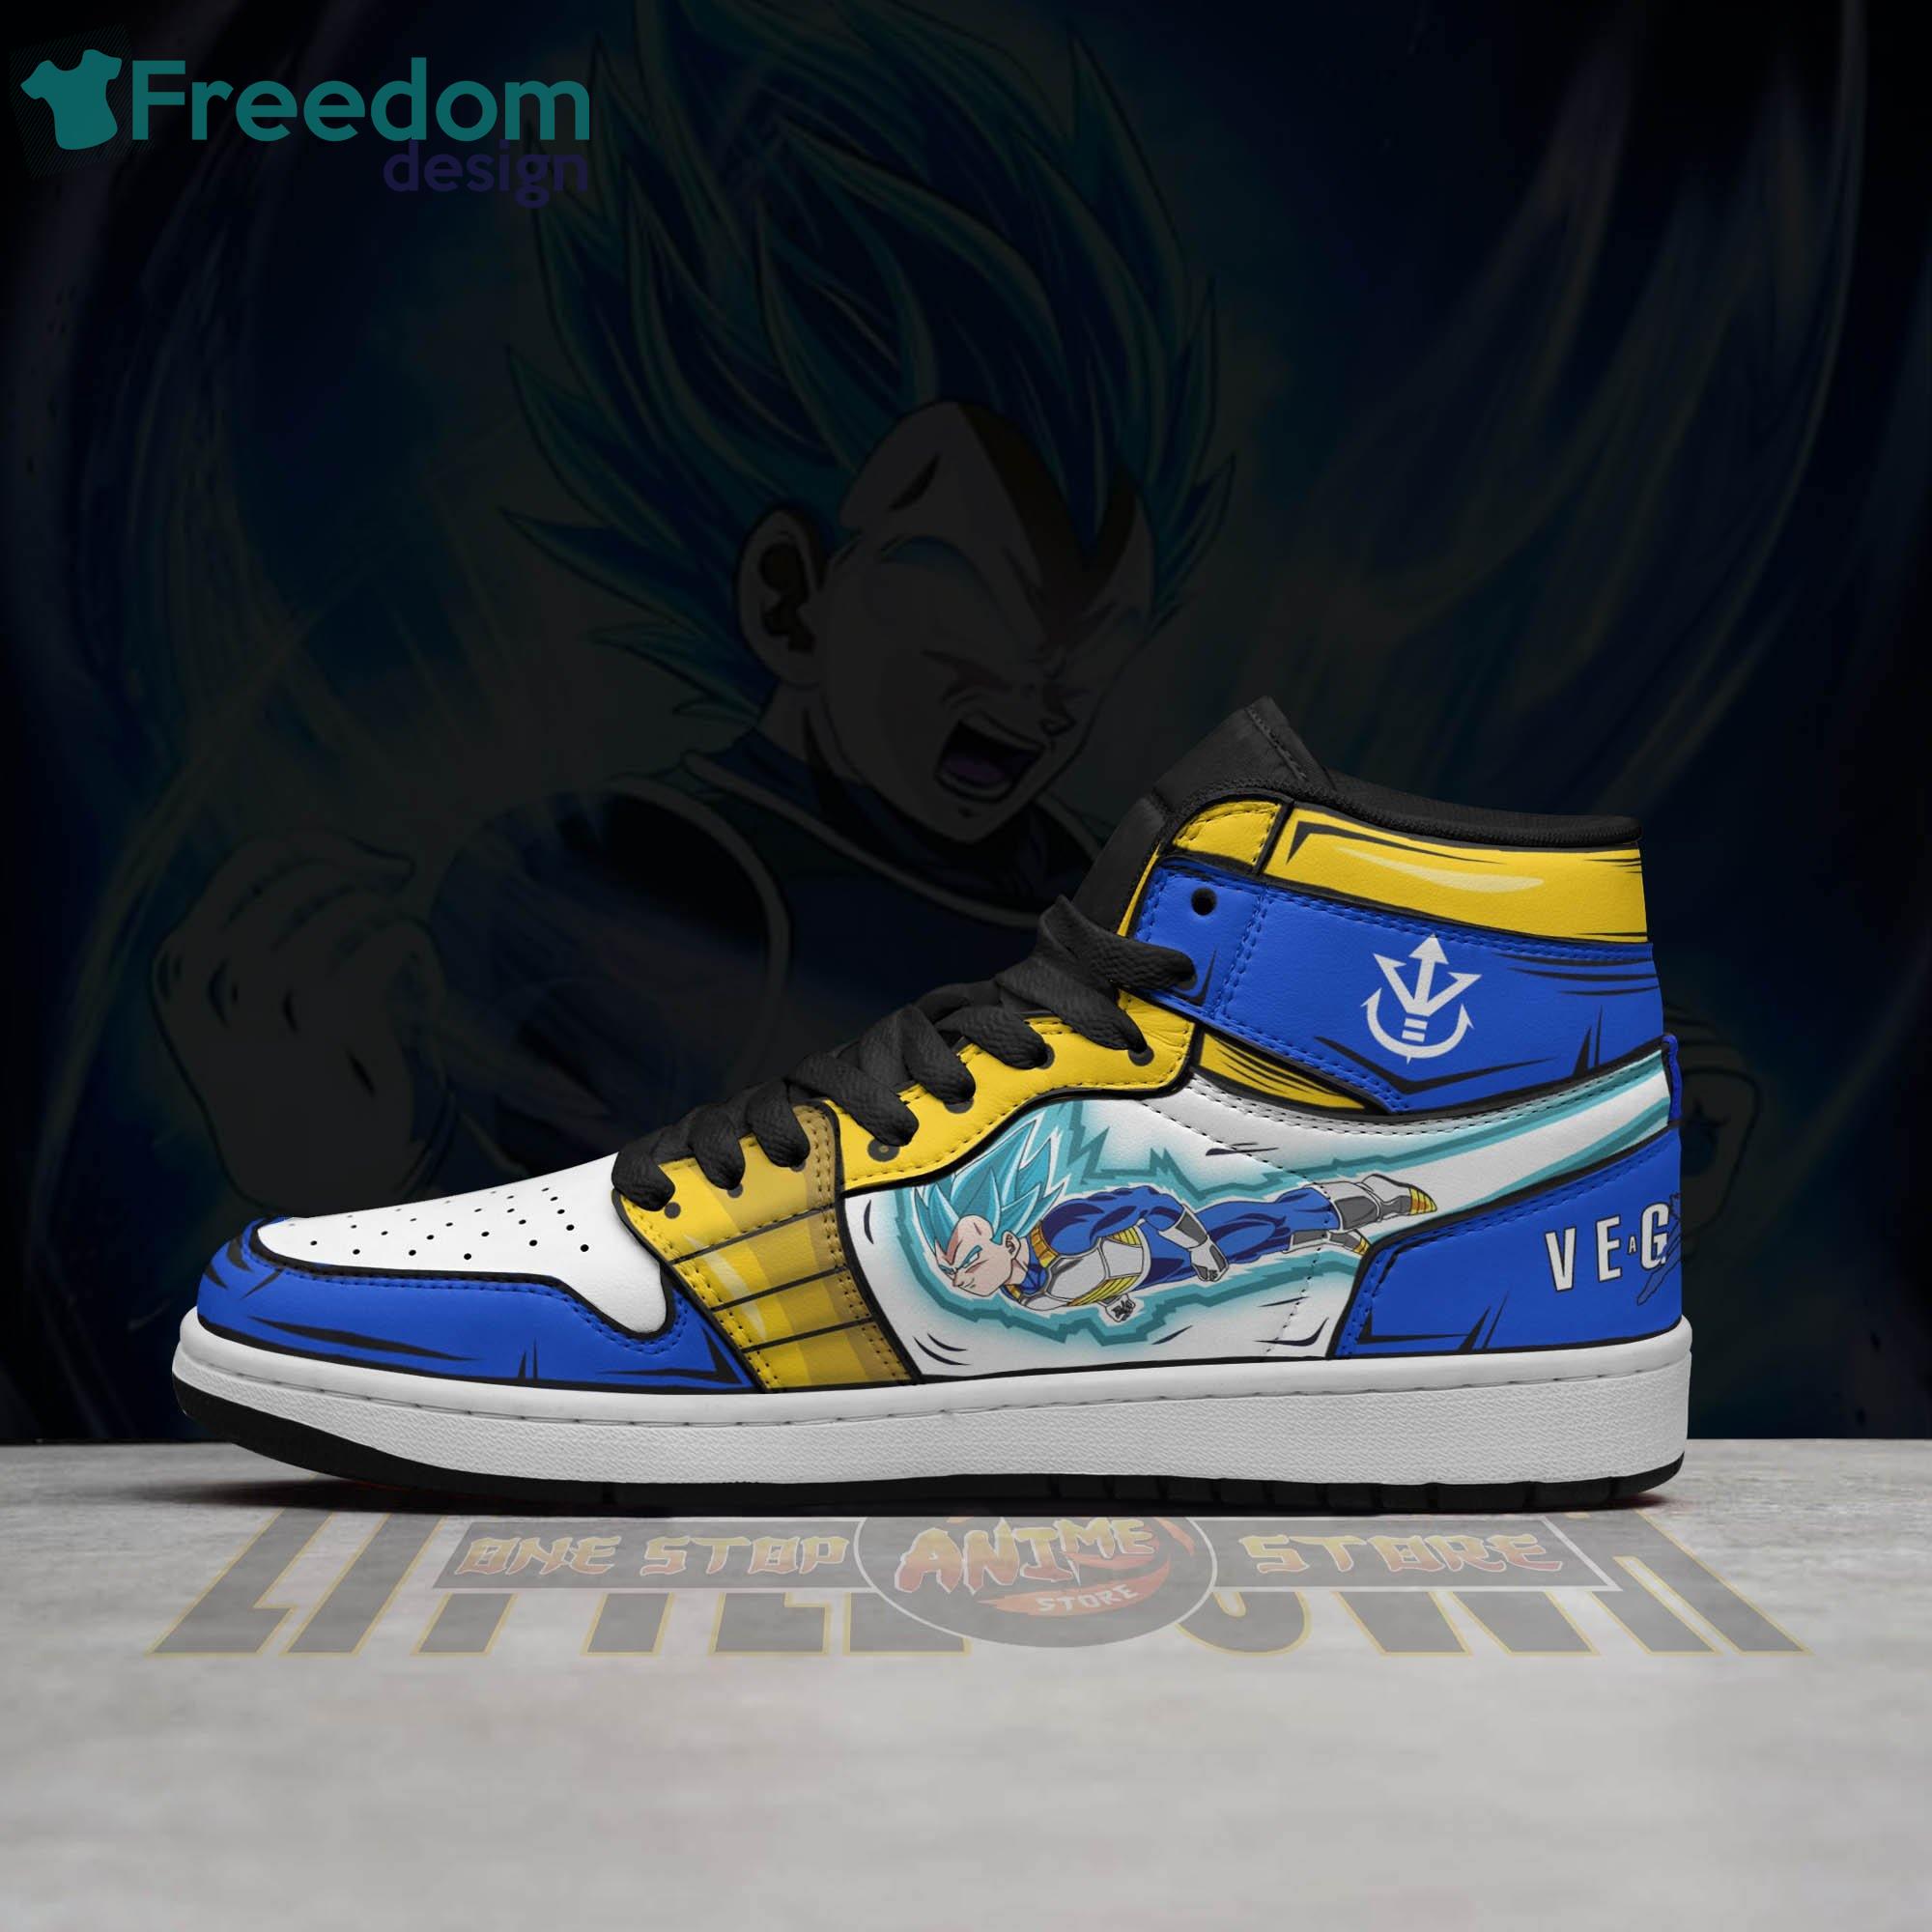 Vegeta Blue Jordan 1 Sneaker Boots, Limited Edition Dragon Ball